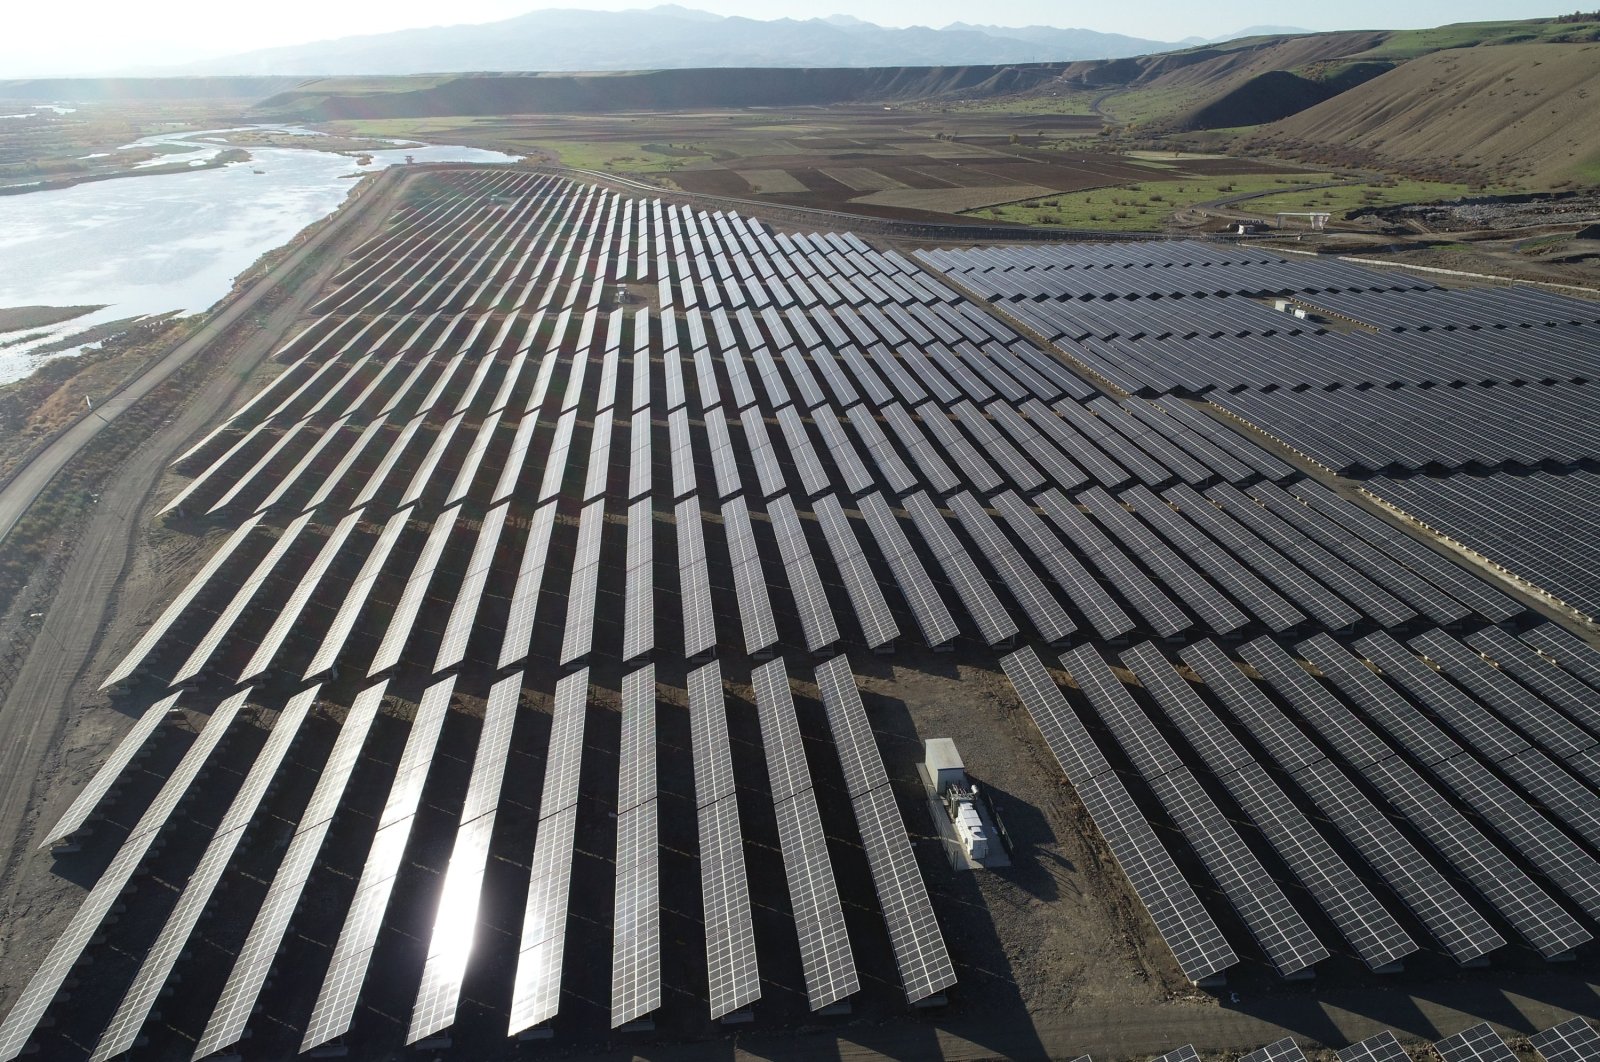 Solar panels are seen at a hybrid solar power plant in the eastern province of Bingöl, Türkiye, Nov. 9, 2021. (AA Photo)